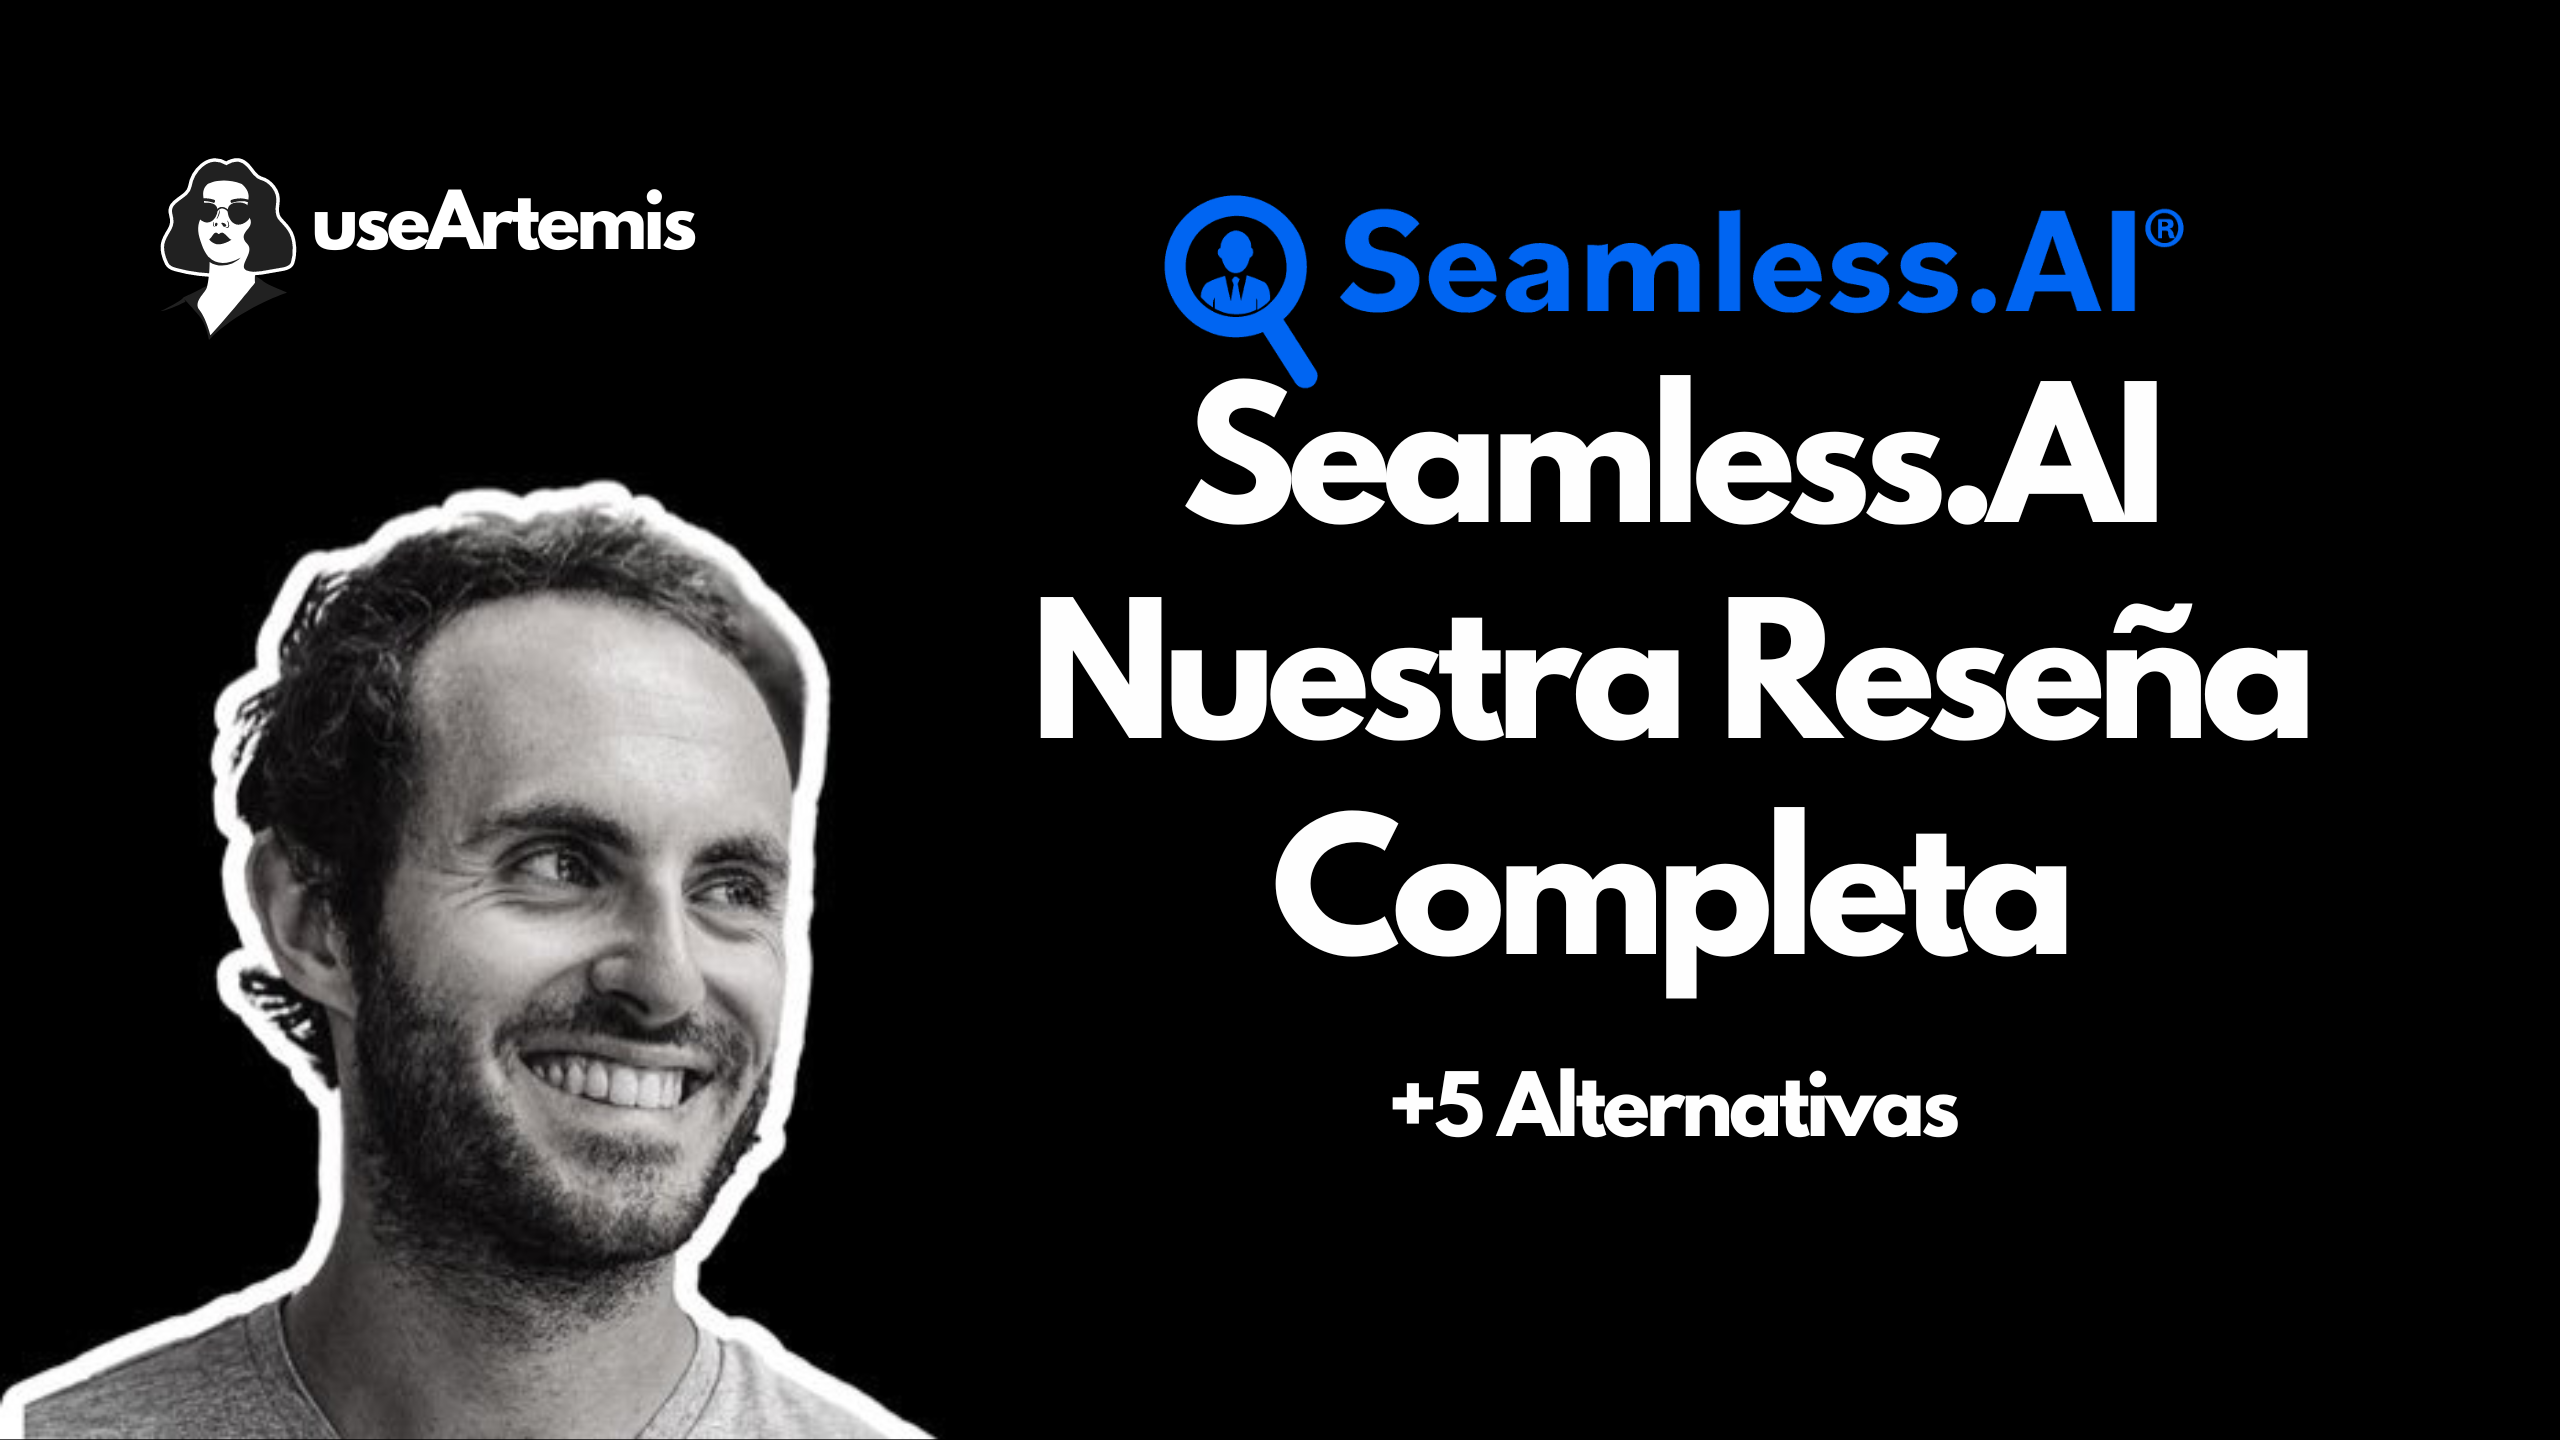 Seamless.AI - Nuestra Reseña Completa